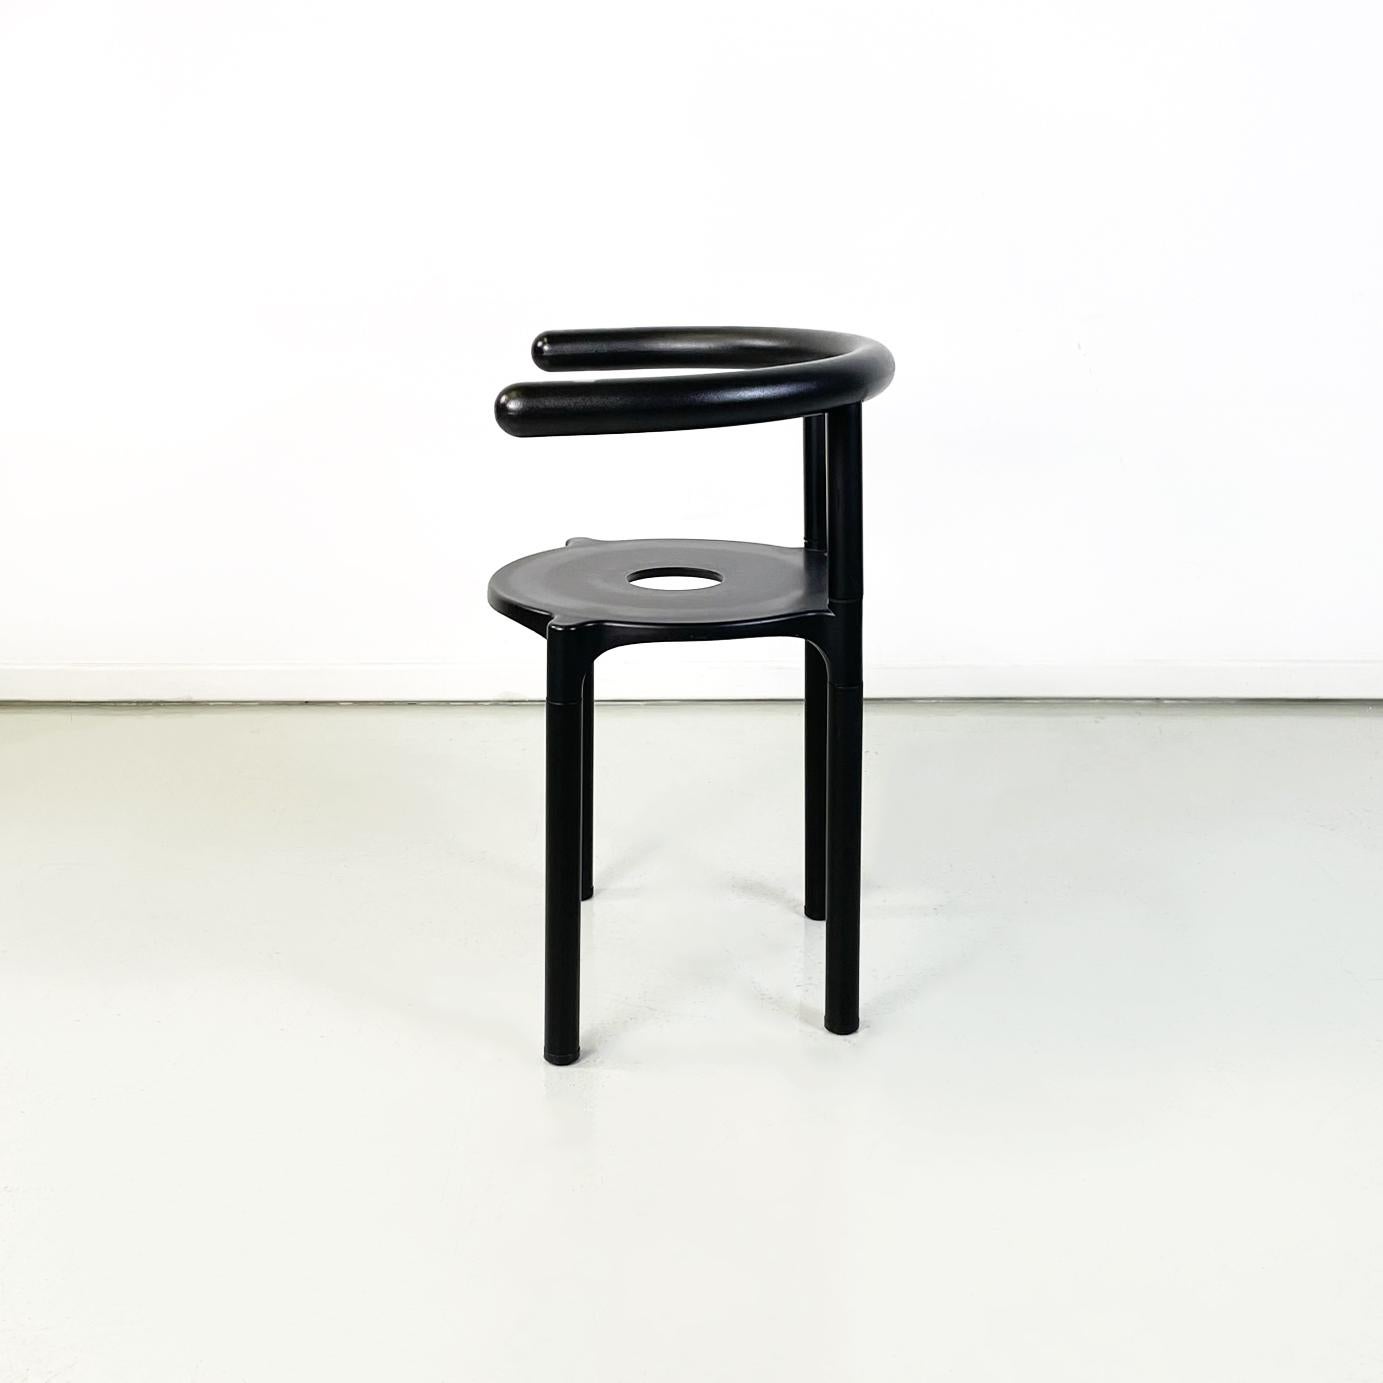 Late 20th Century Italian Modern Black Metal Plastic Chairs 4855 by Anna Castelli Kartell, 1990s